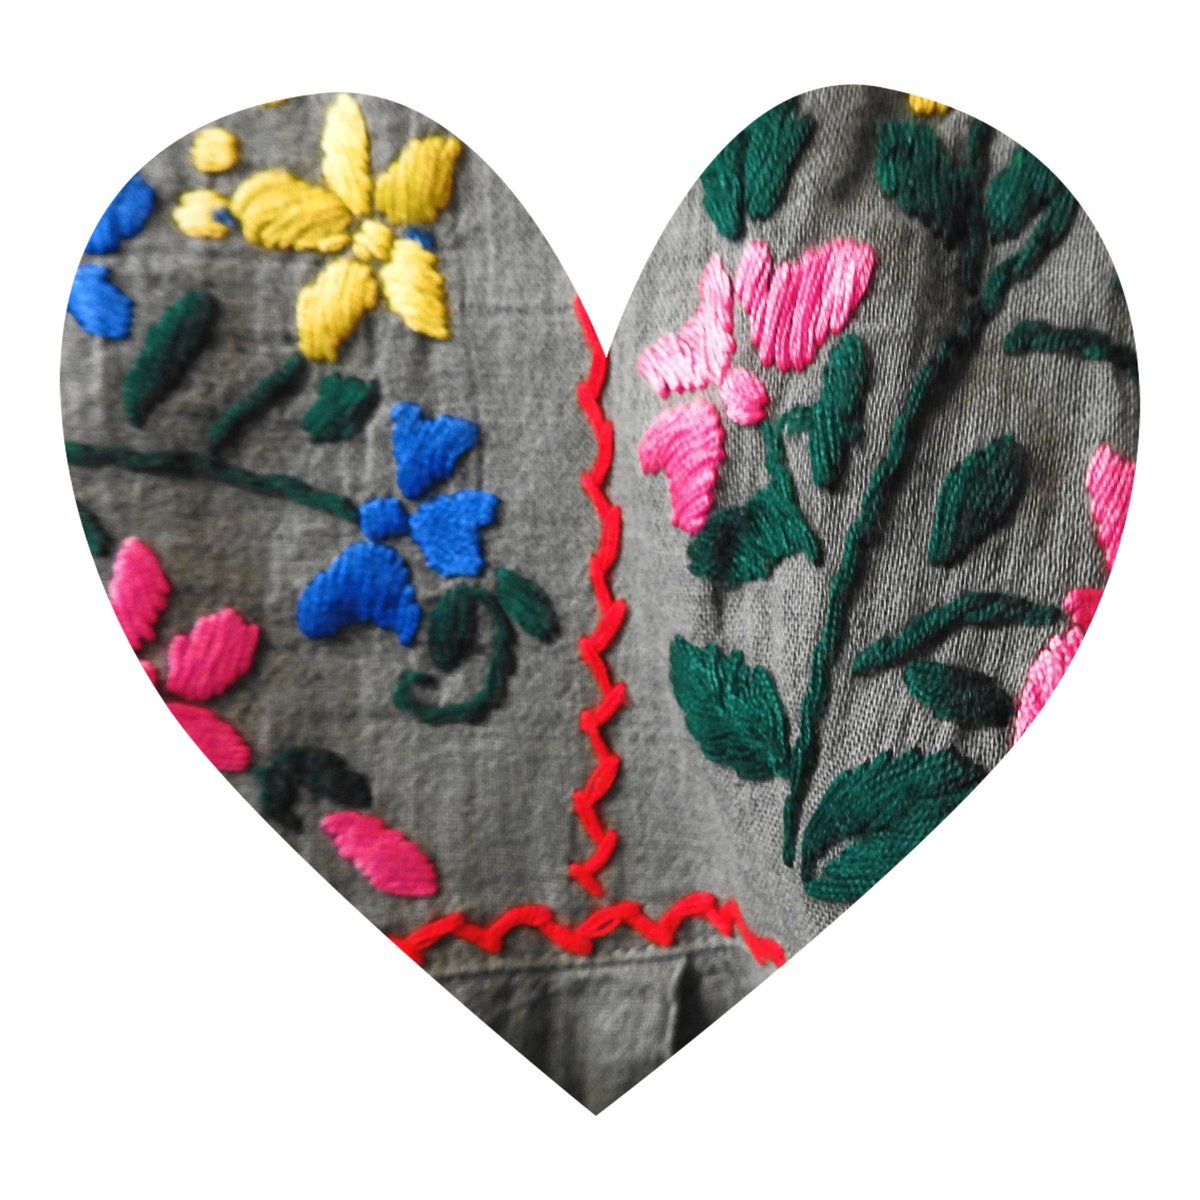 soo.nr/xyss
🌼
#embroiderydesigns #embroideryflowers #embroideryblouse #embroiderythread #embroiderystitches #embroiderylover#embroideredcollection #bordado #needlework #handmade #dmc